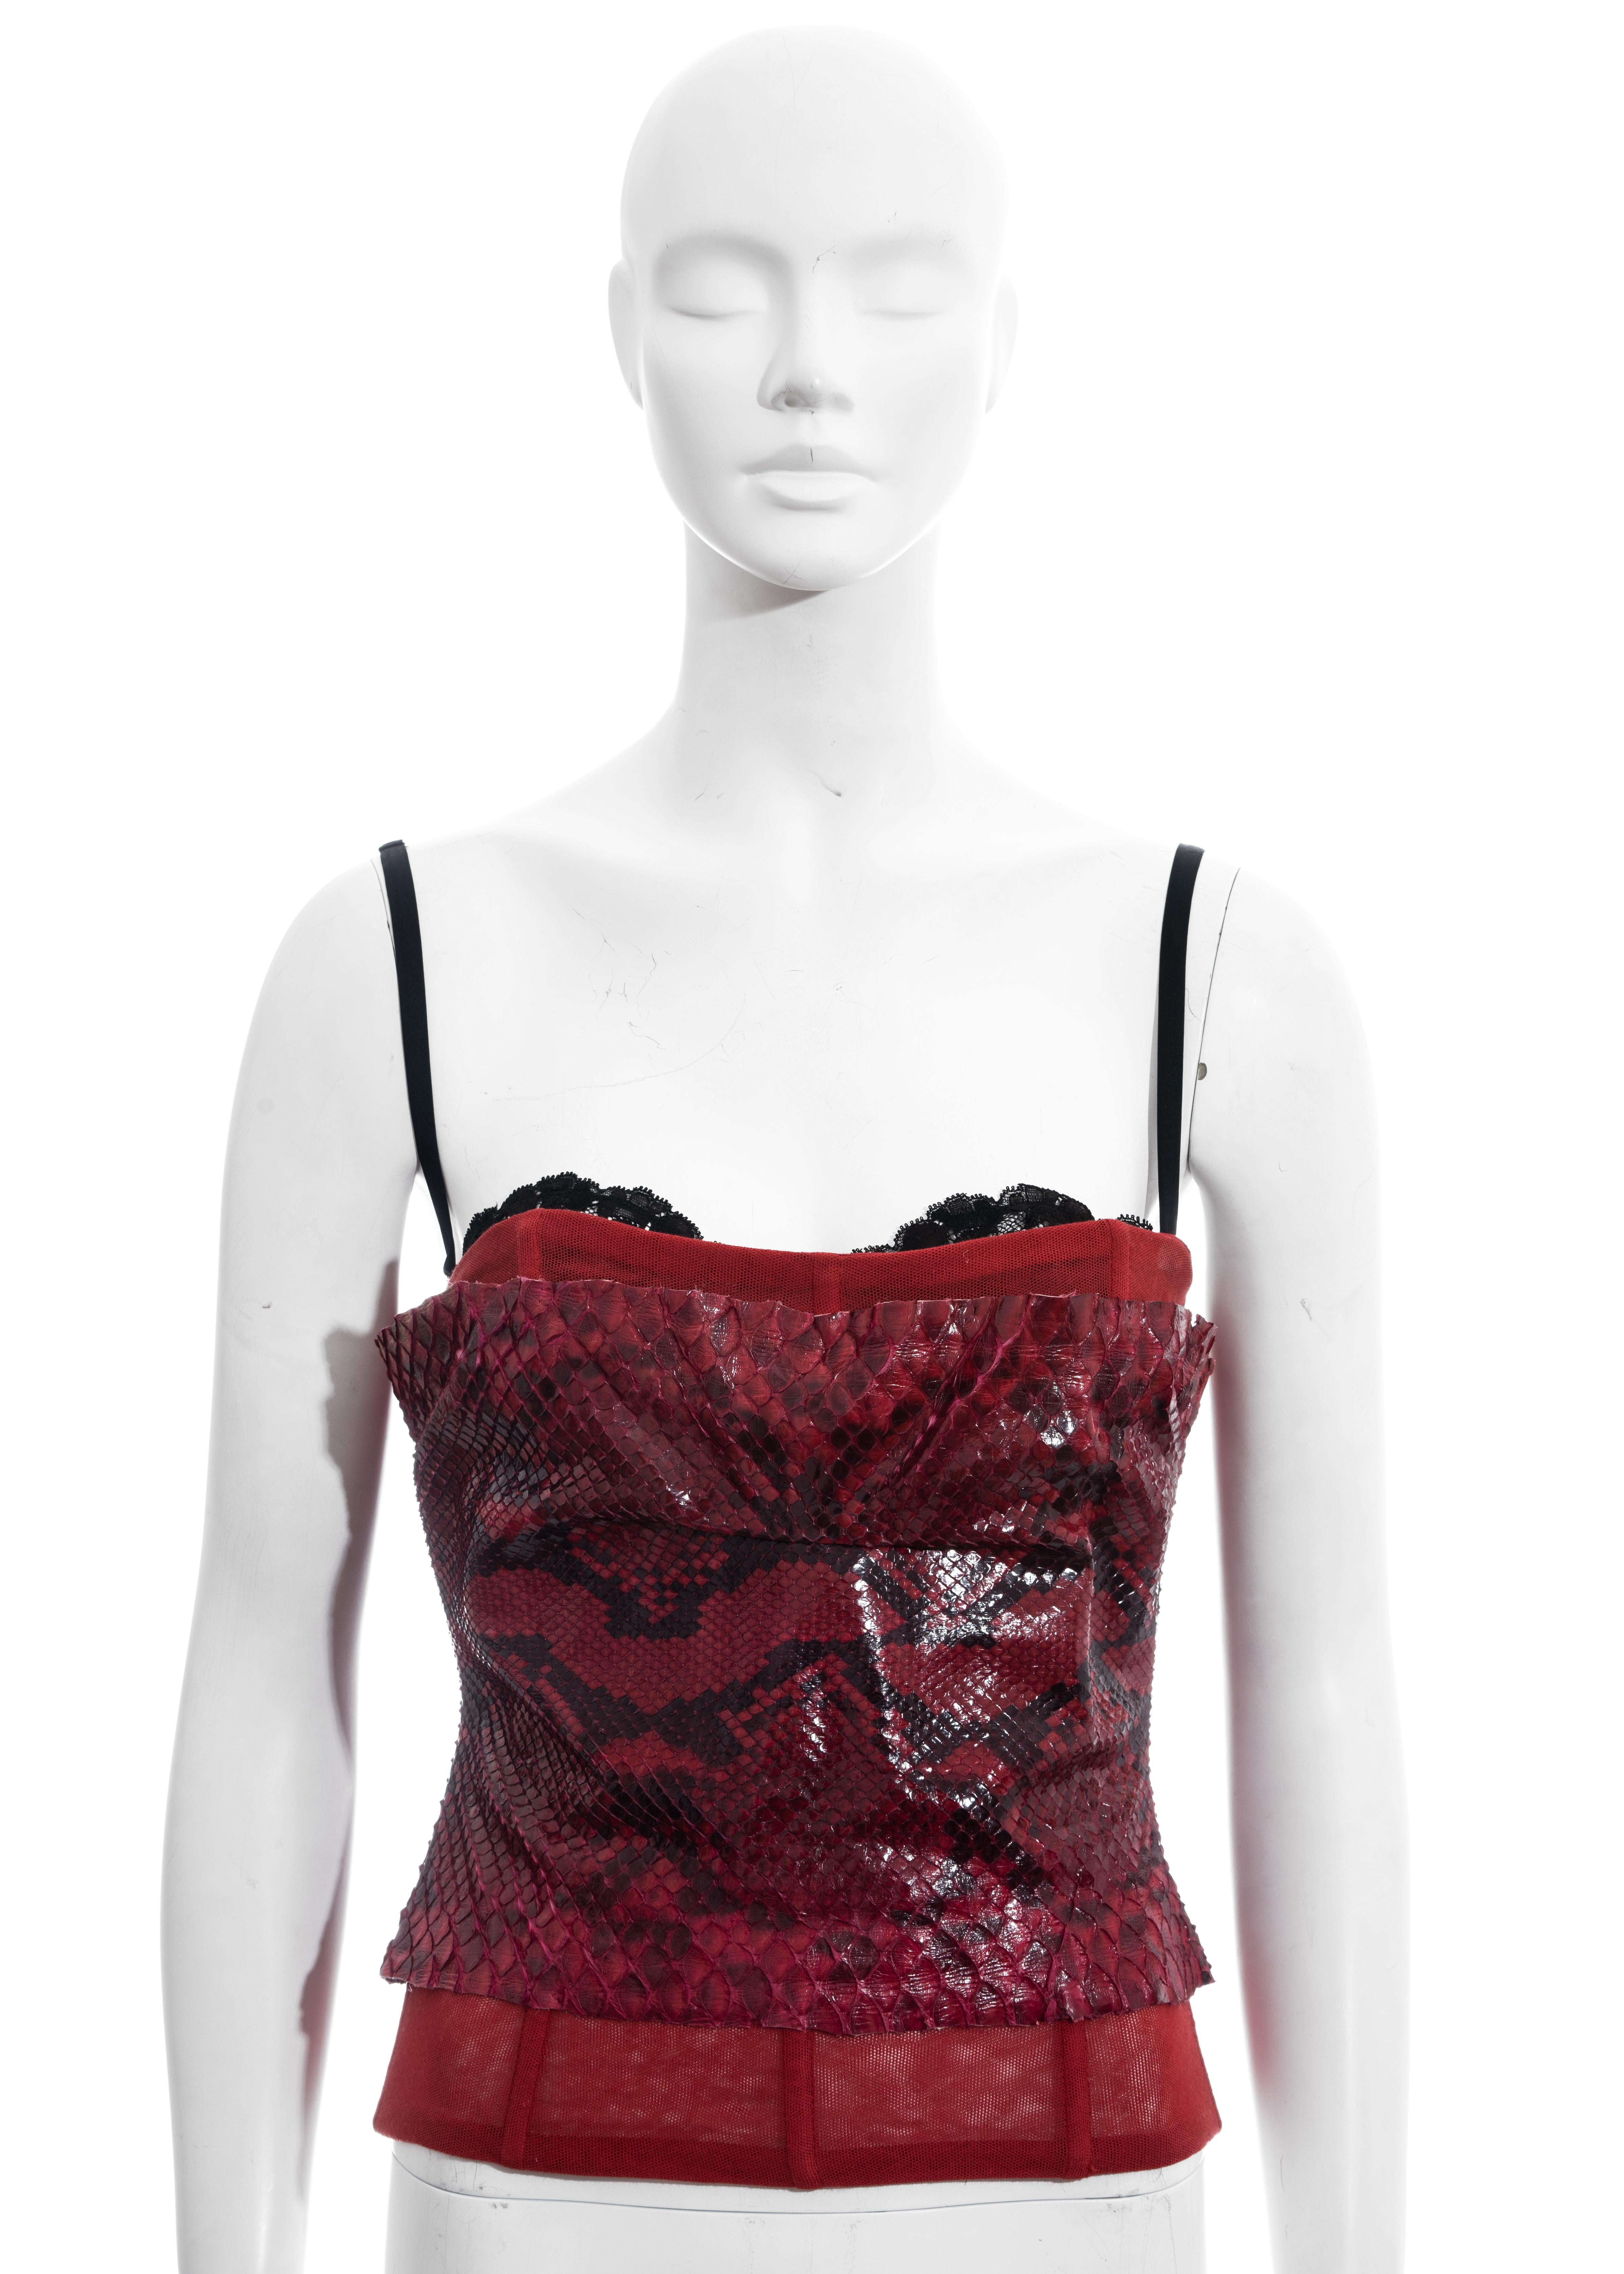 ▪ Dolce & Gabbana red leather corset
▪ 100% Python
▪ Built in satin lace bra 
▪ Internal boning 
▪ Zip fastening 
▪ IT 44 - FR 40 - UK 12 - US 8
▪ Spring-Summer 2005